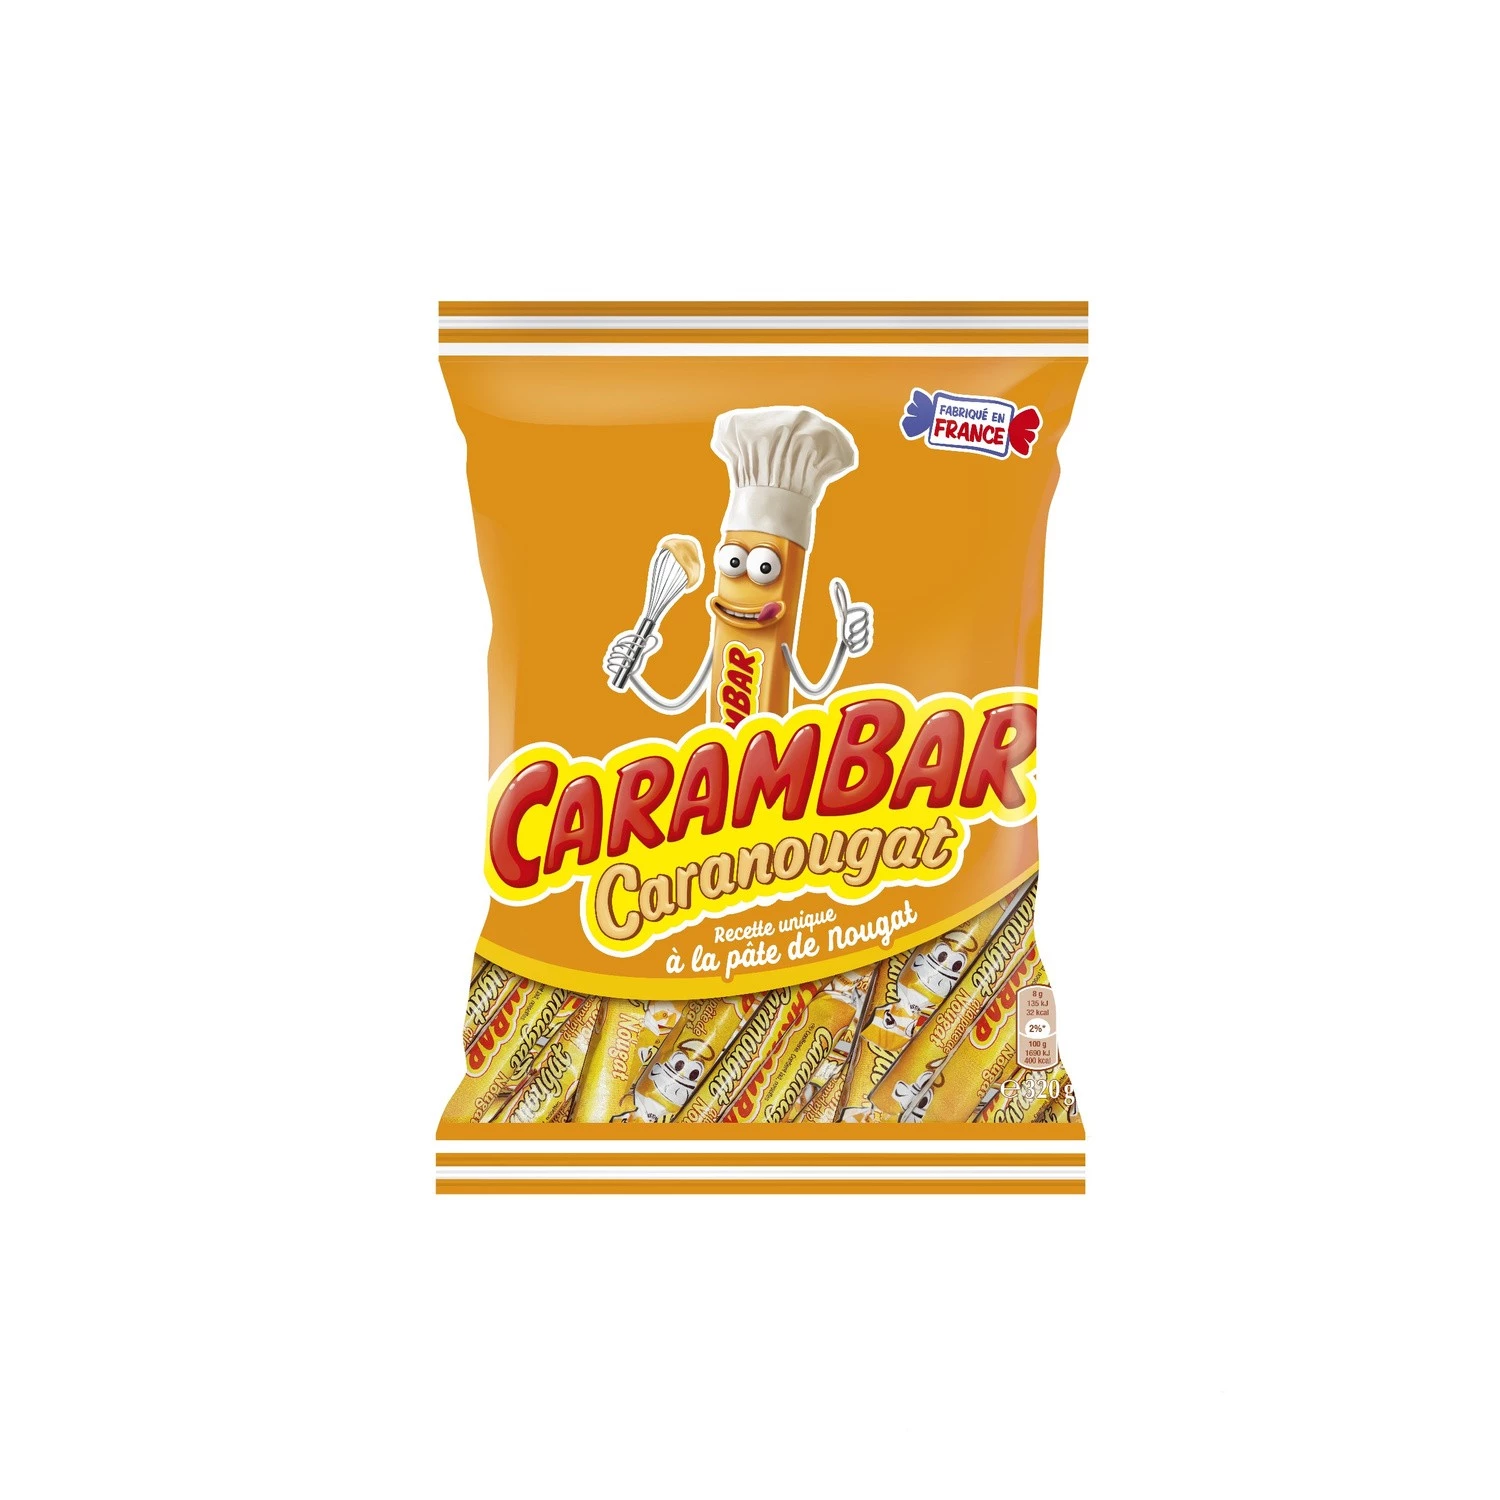 Caranougat candy 320g - CARAMBAR